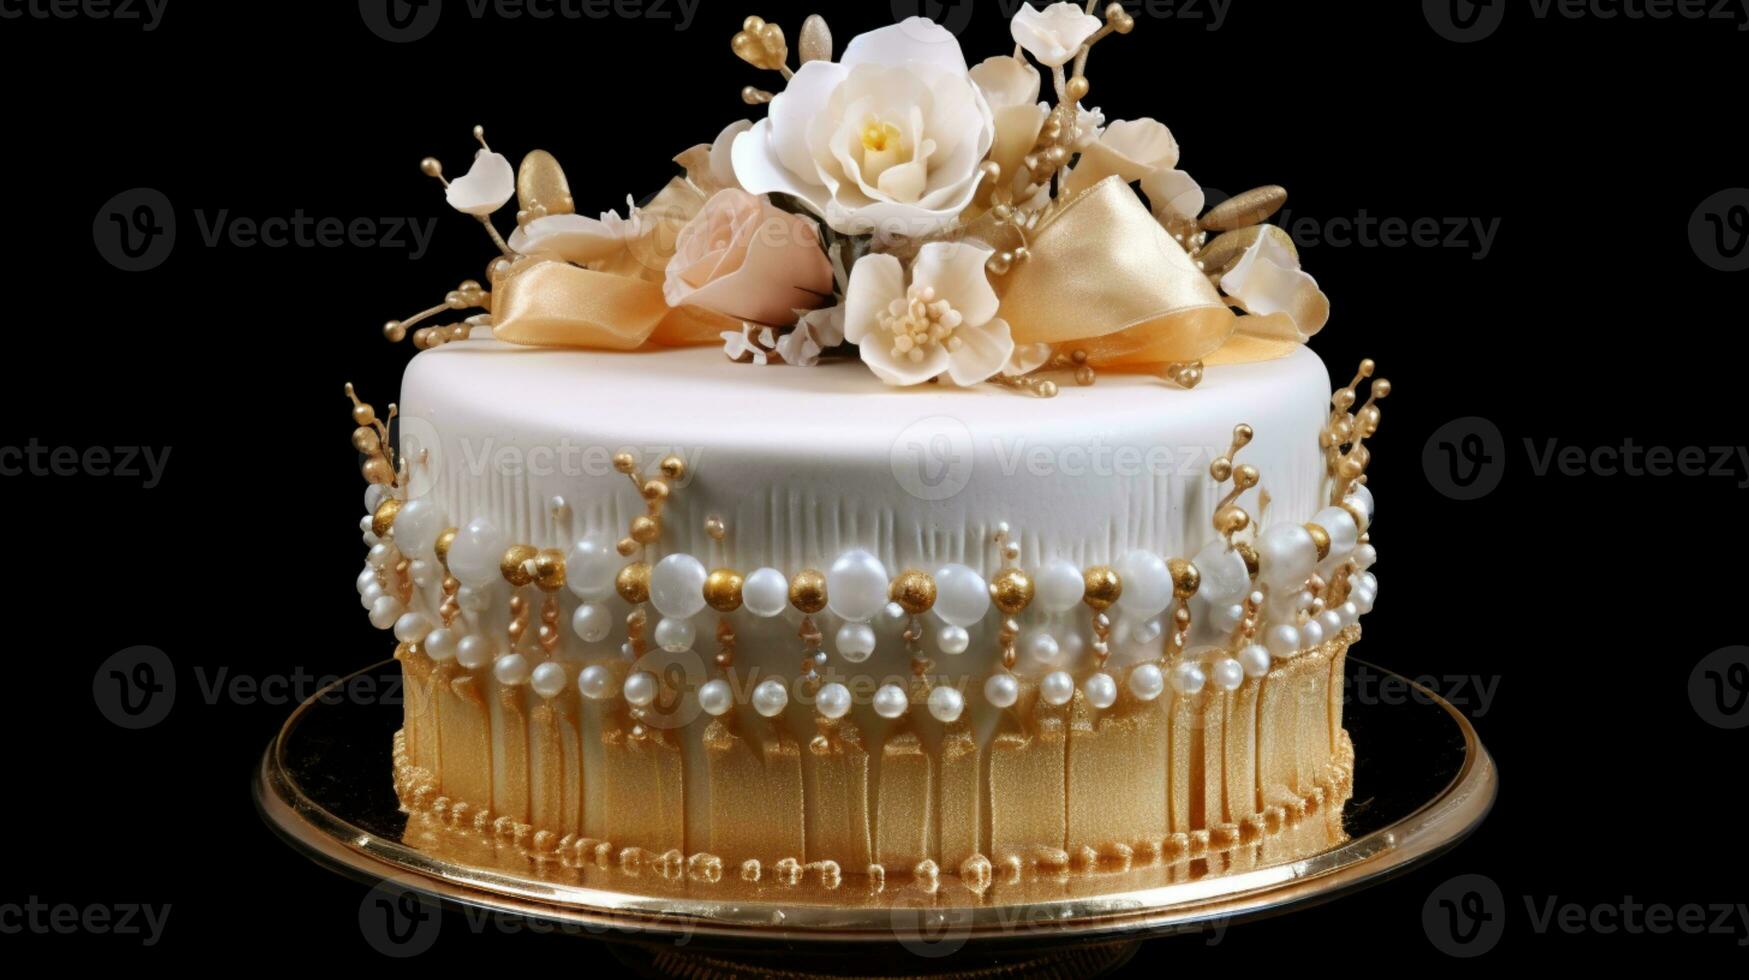 luxury birthday cake 3d design on black background photo